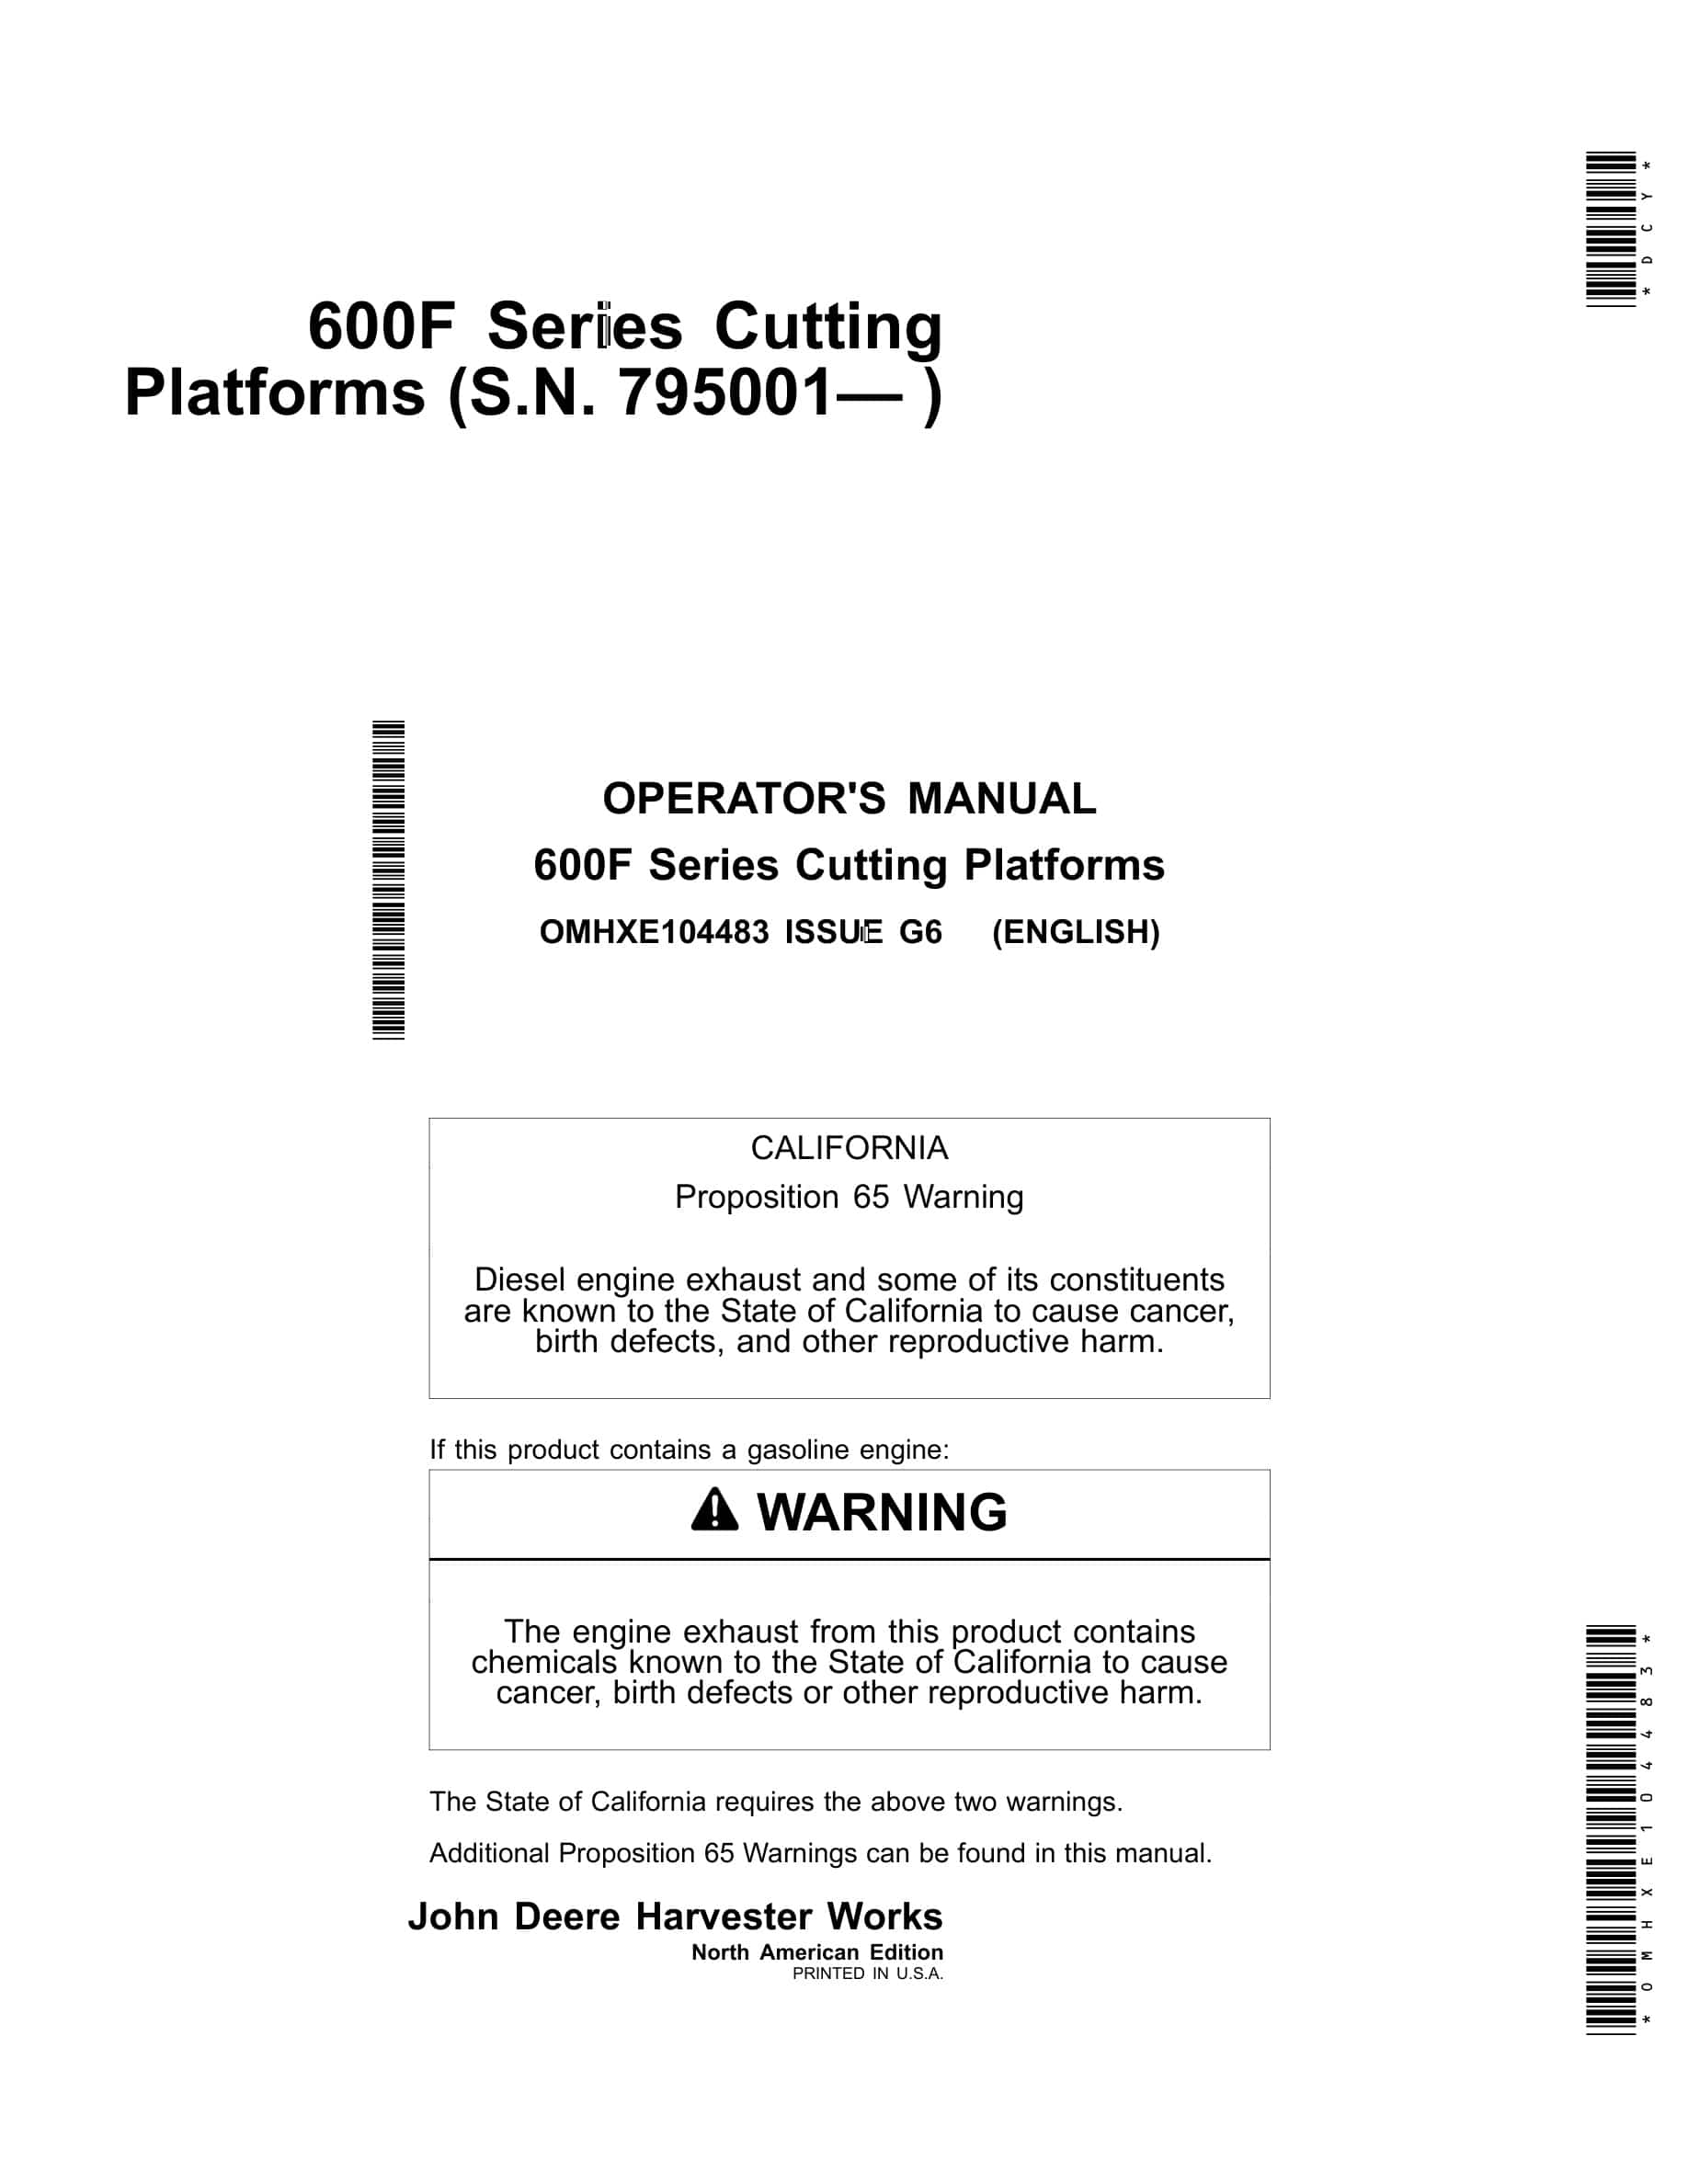 John Deere 600 F Series Cutting Platforms Operator Manual OMHXE104483-1